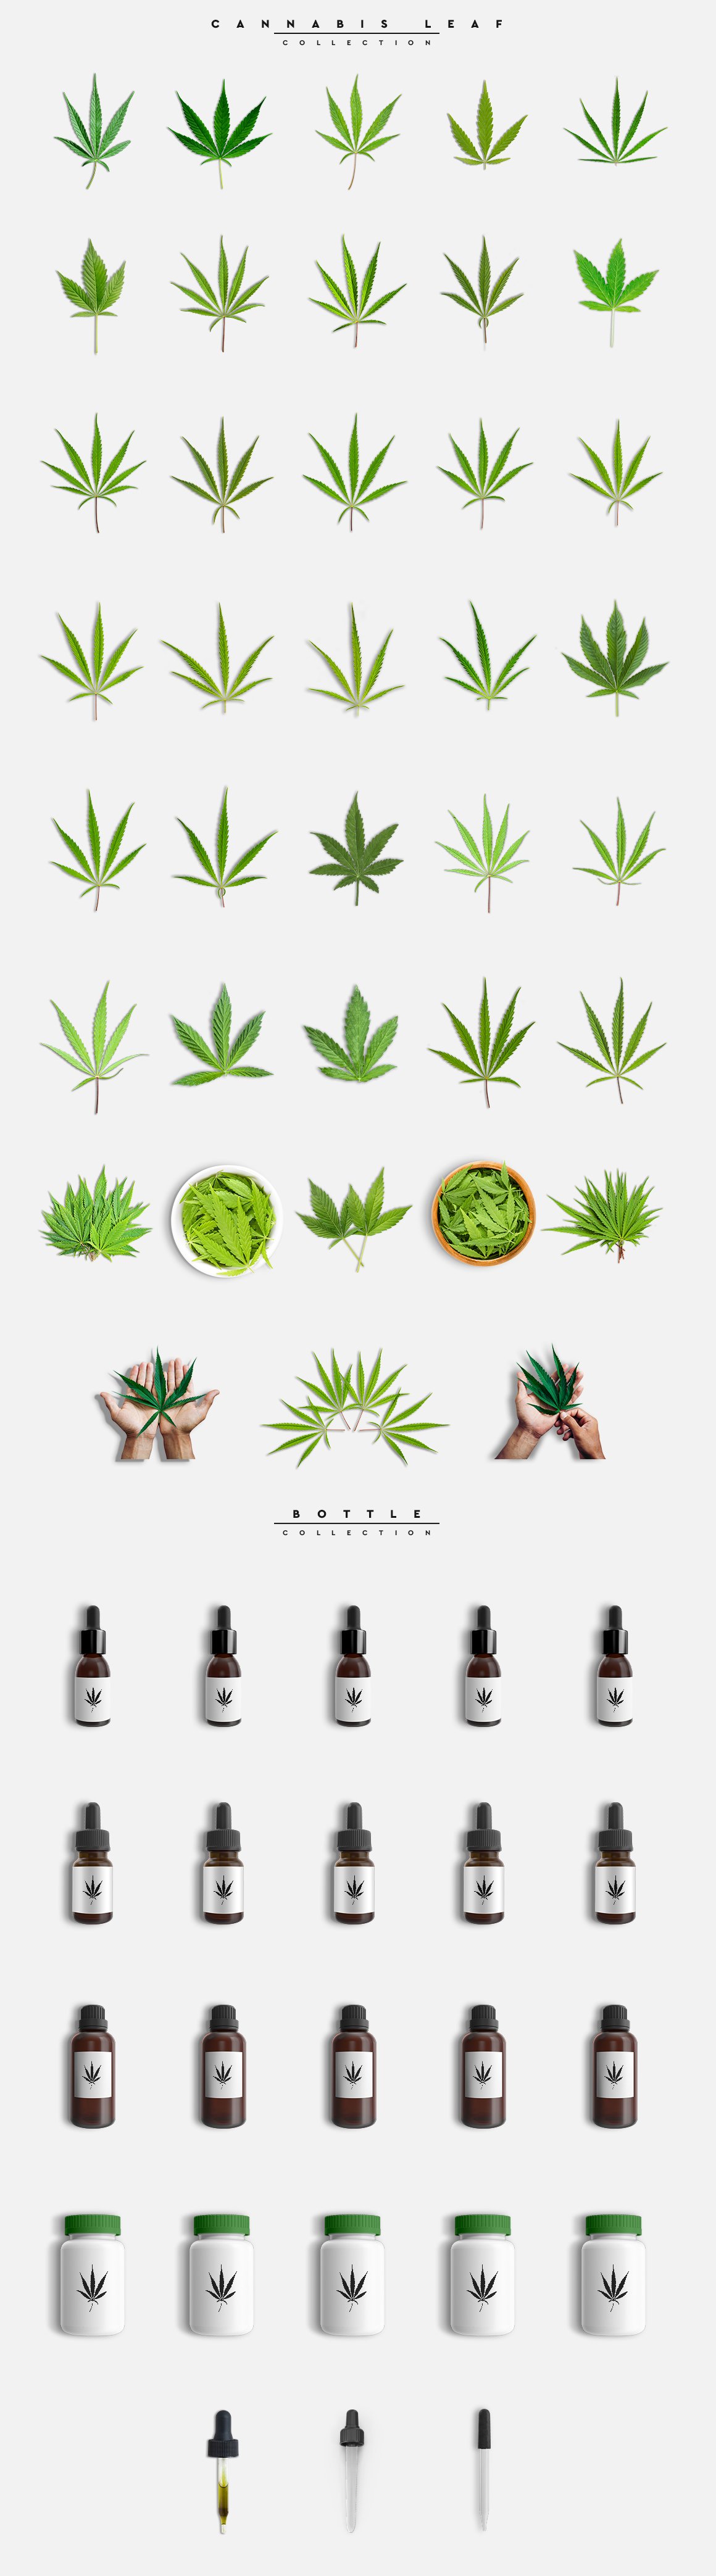 Cannabis Scene Creator #01 preview image.